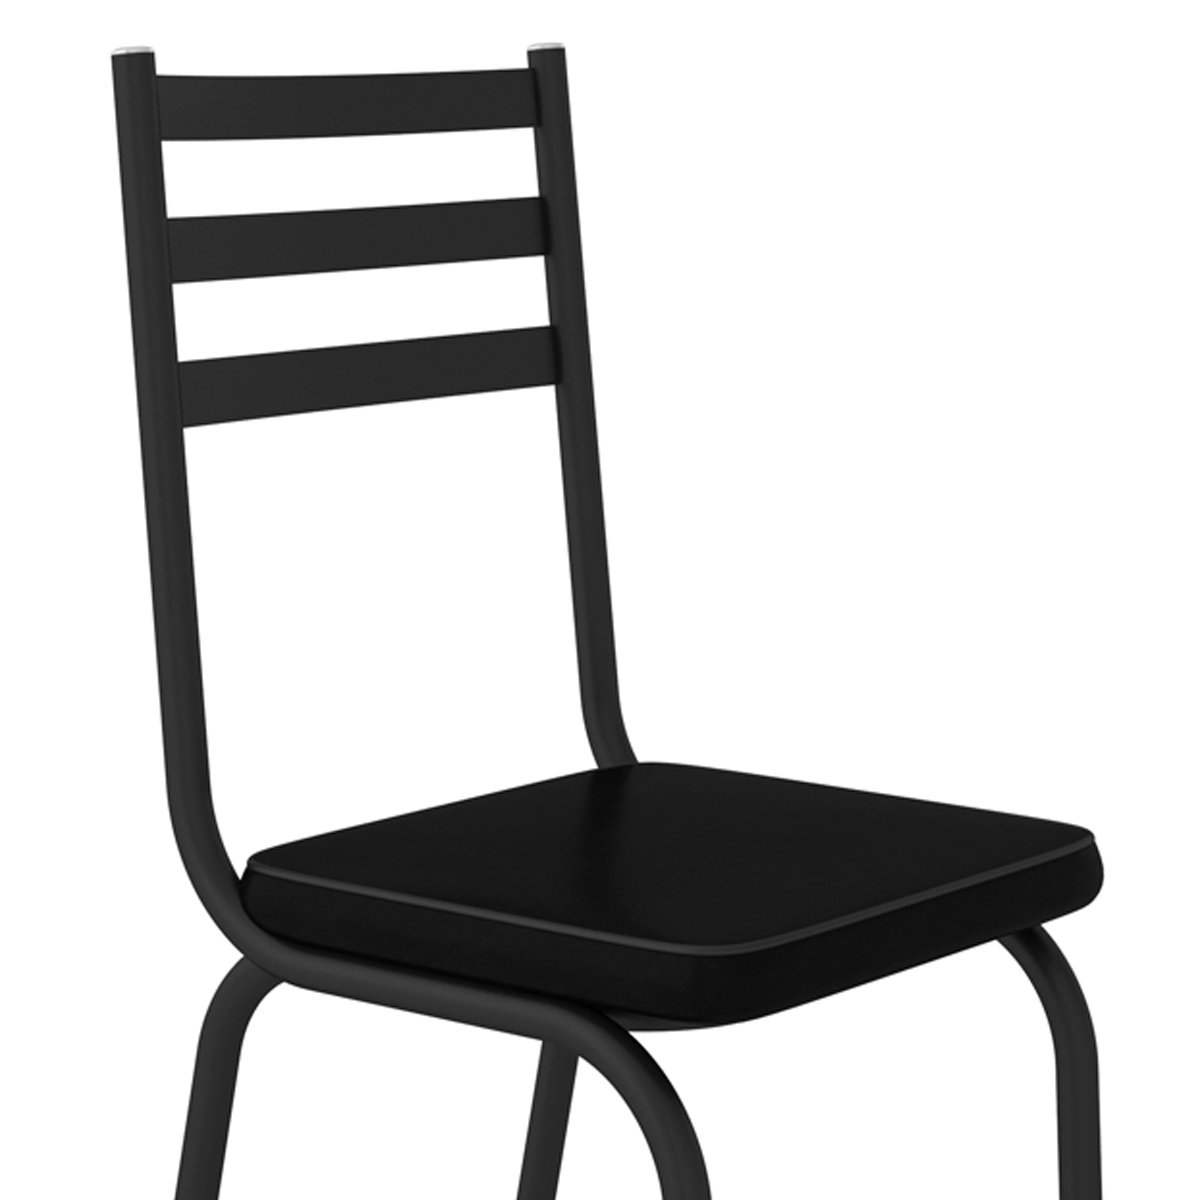 Conjunto De Mesa Com 4 Cadeiras Malva Tampo De Vidro 75cm Preto Artefamol 9993 - ASSENTO PRETO - 5